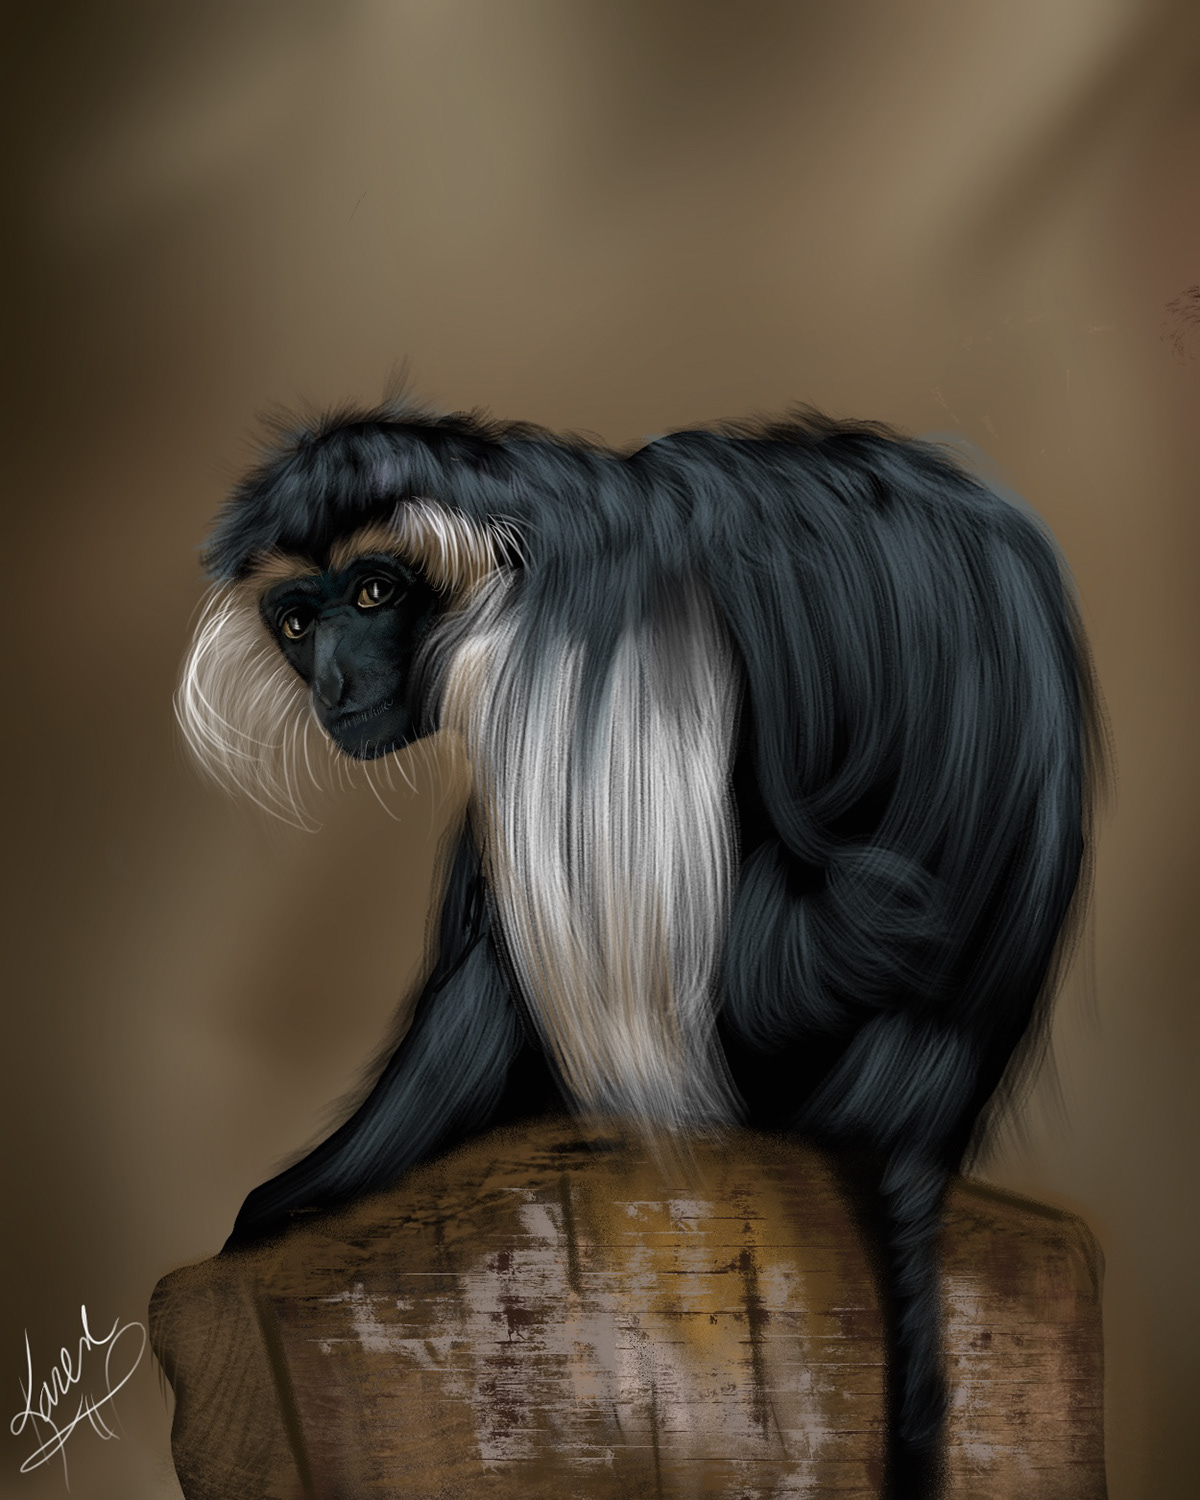 Digital Art  digital painting Drawing  illustrations animals primate monkey colobus monkey